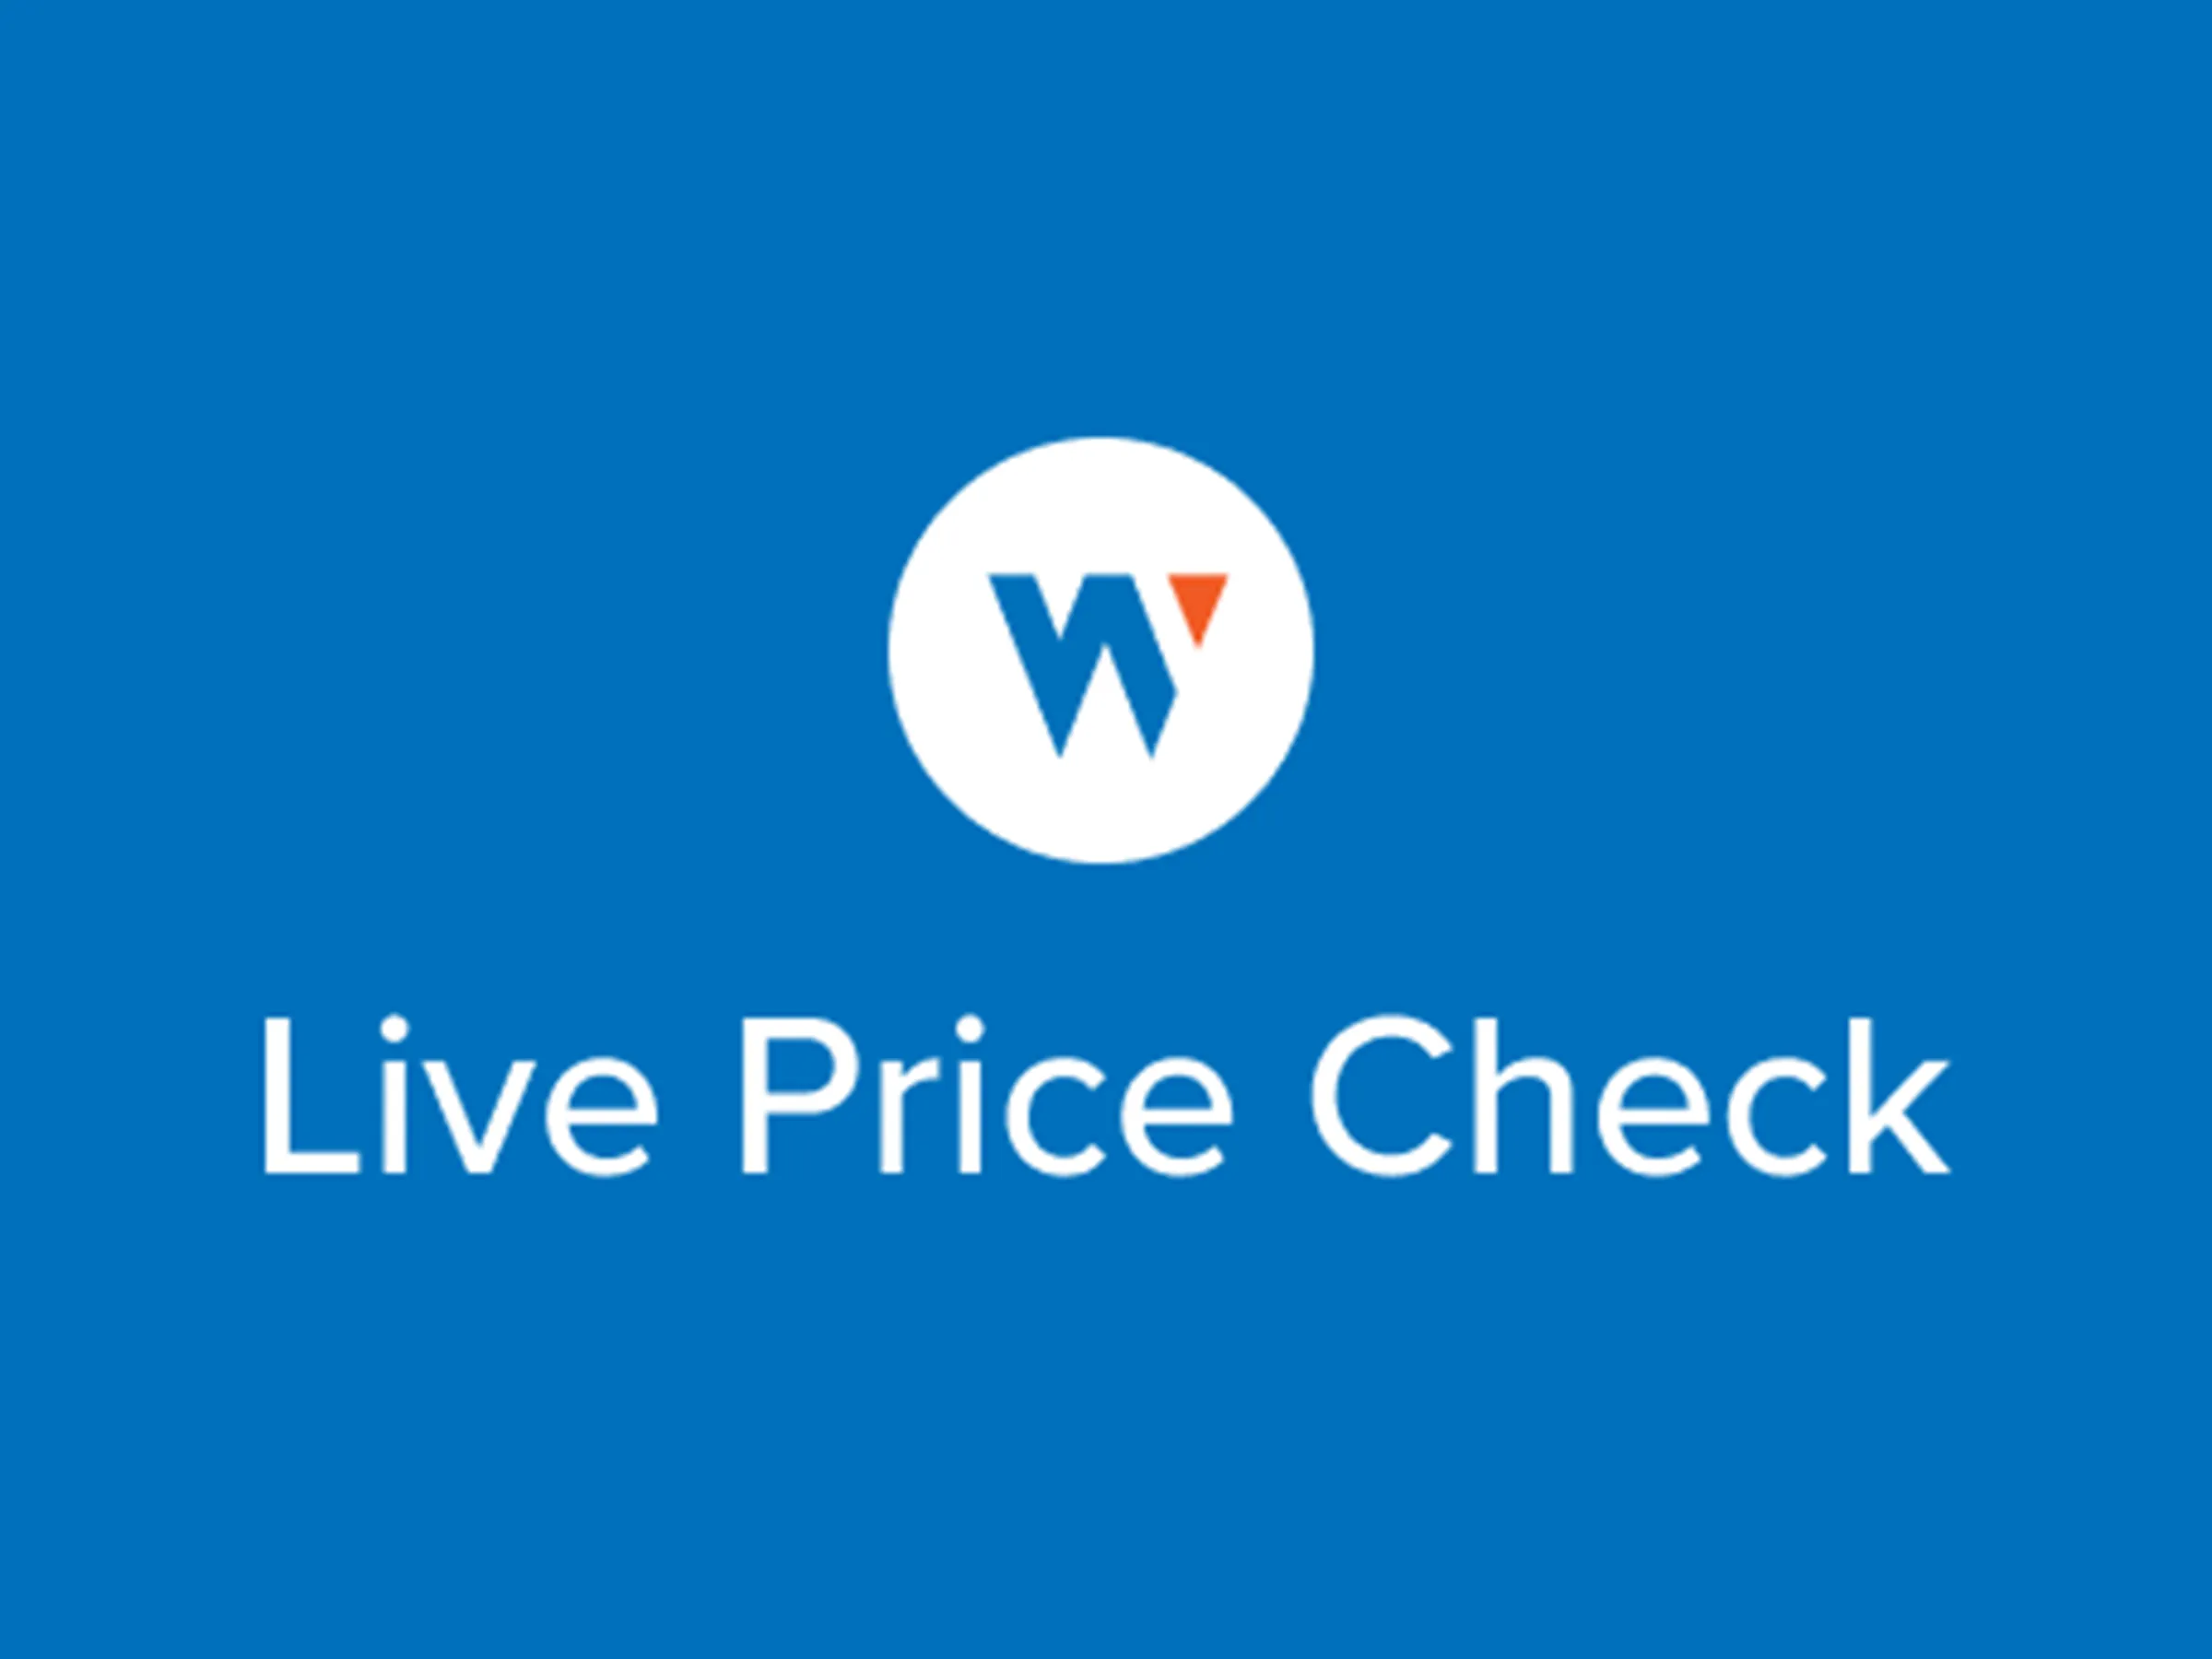 live price check Image